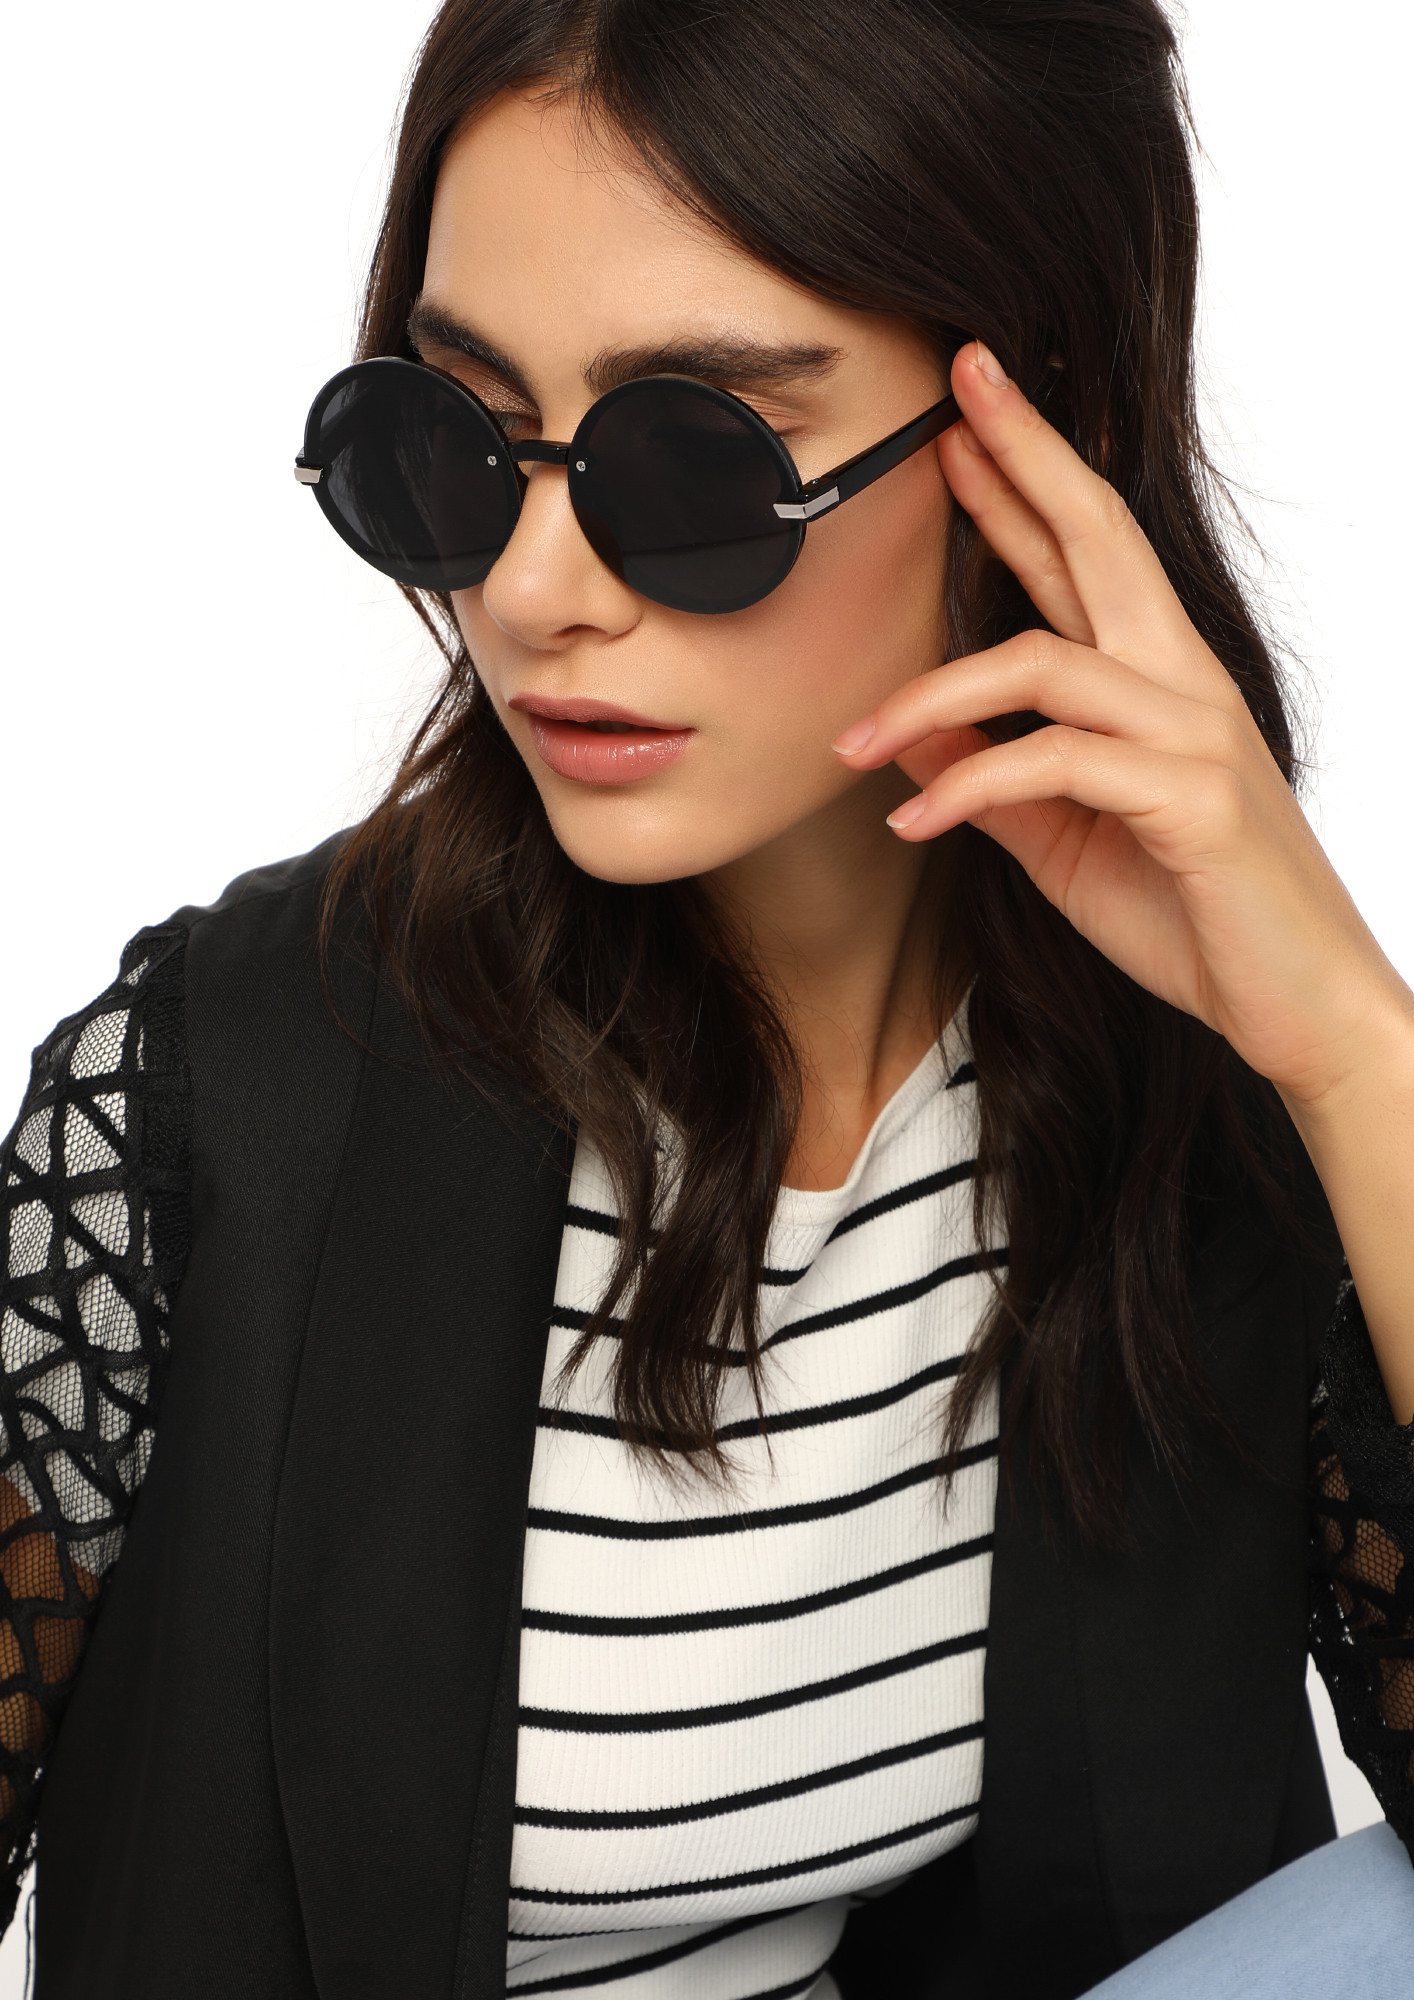 Aggregate more than 149 black round sunglasses womens